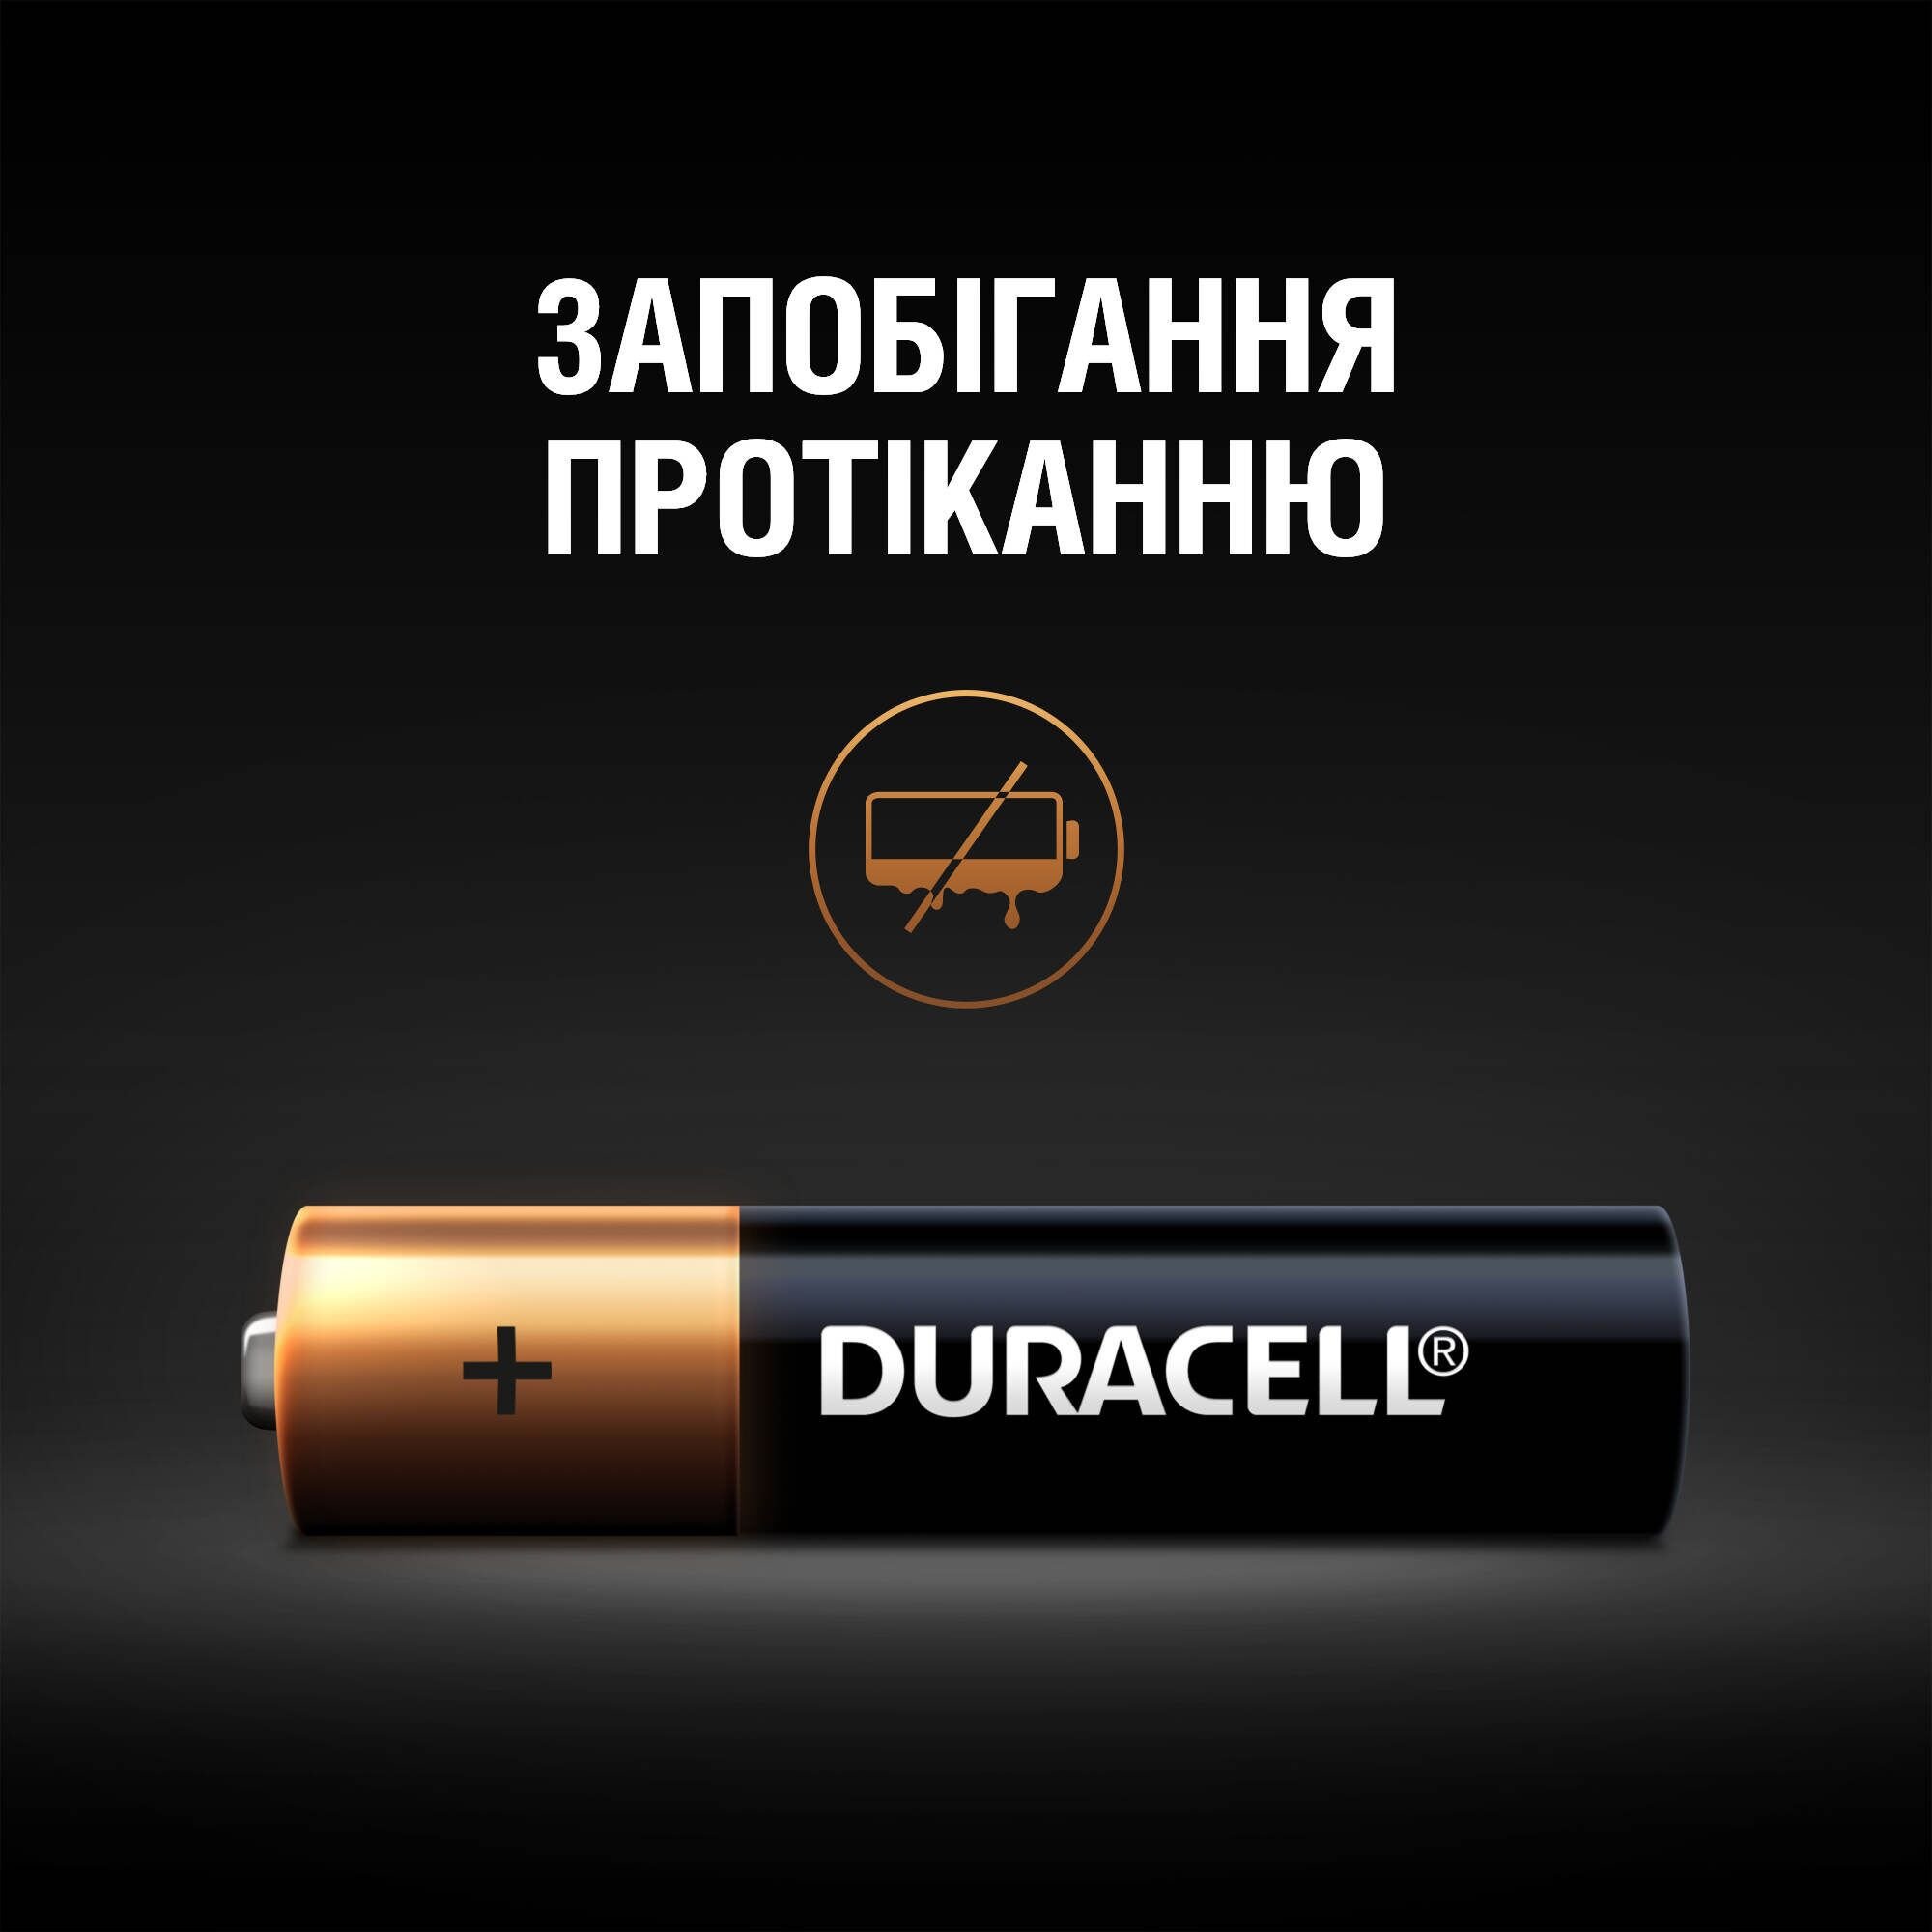 Щелочные батарейки мизинчиковые Duracell Basic 1.5 V AA LR03/MN2400, 12 шт. - фото 6